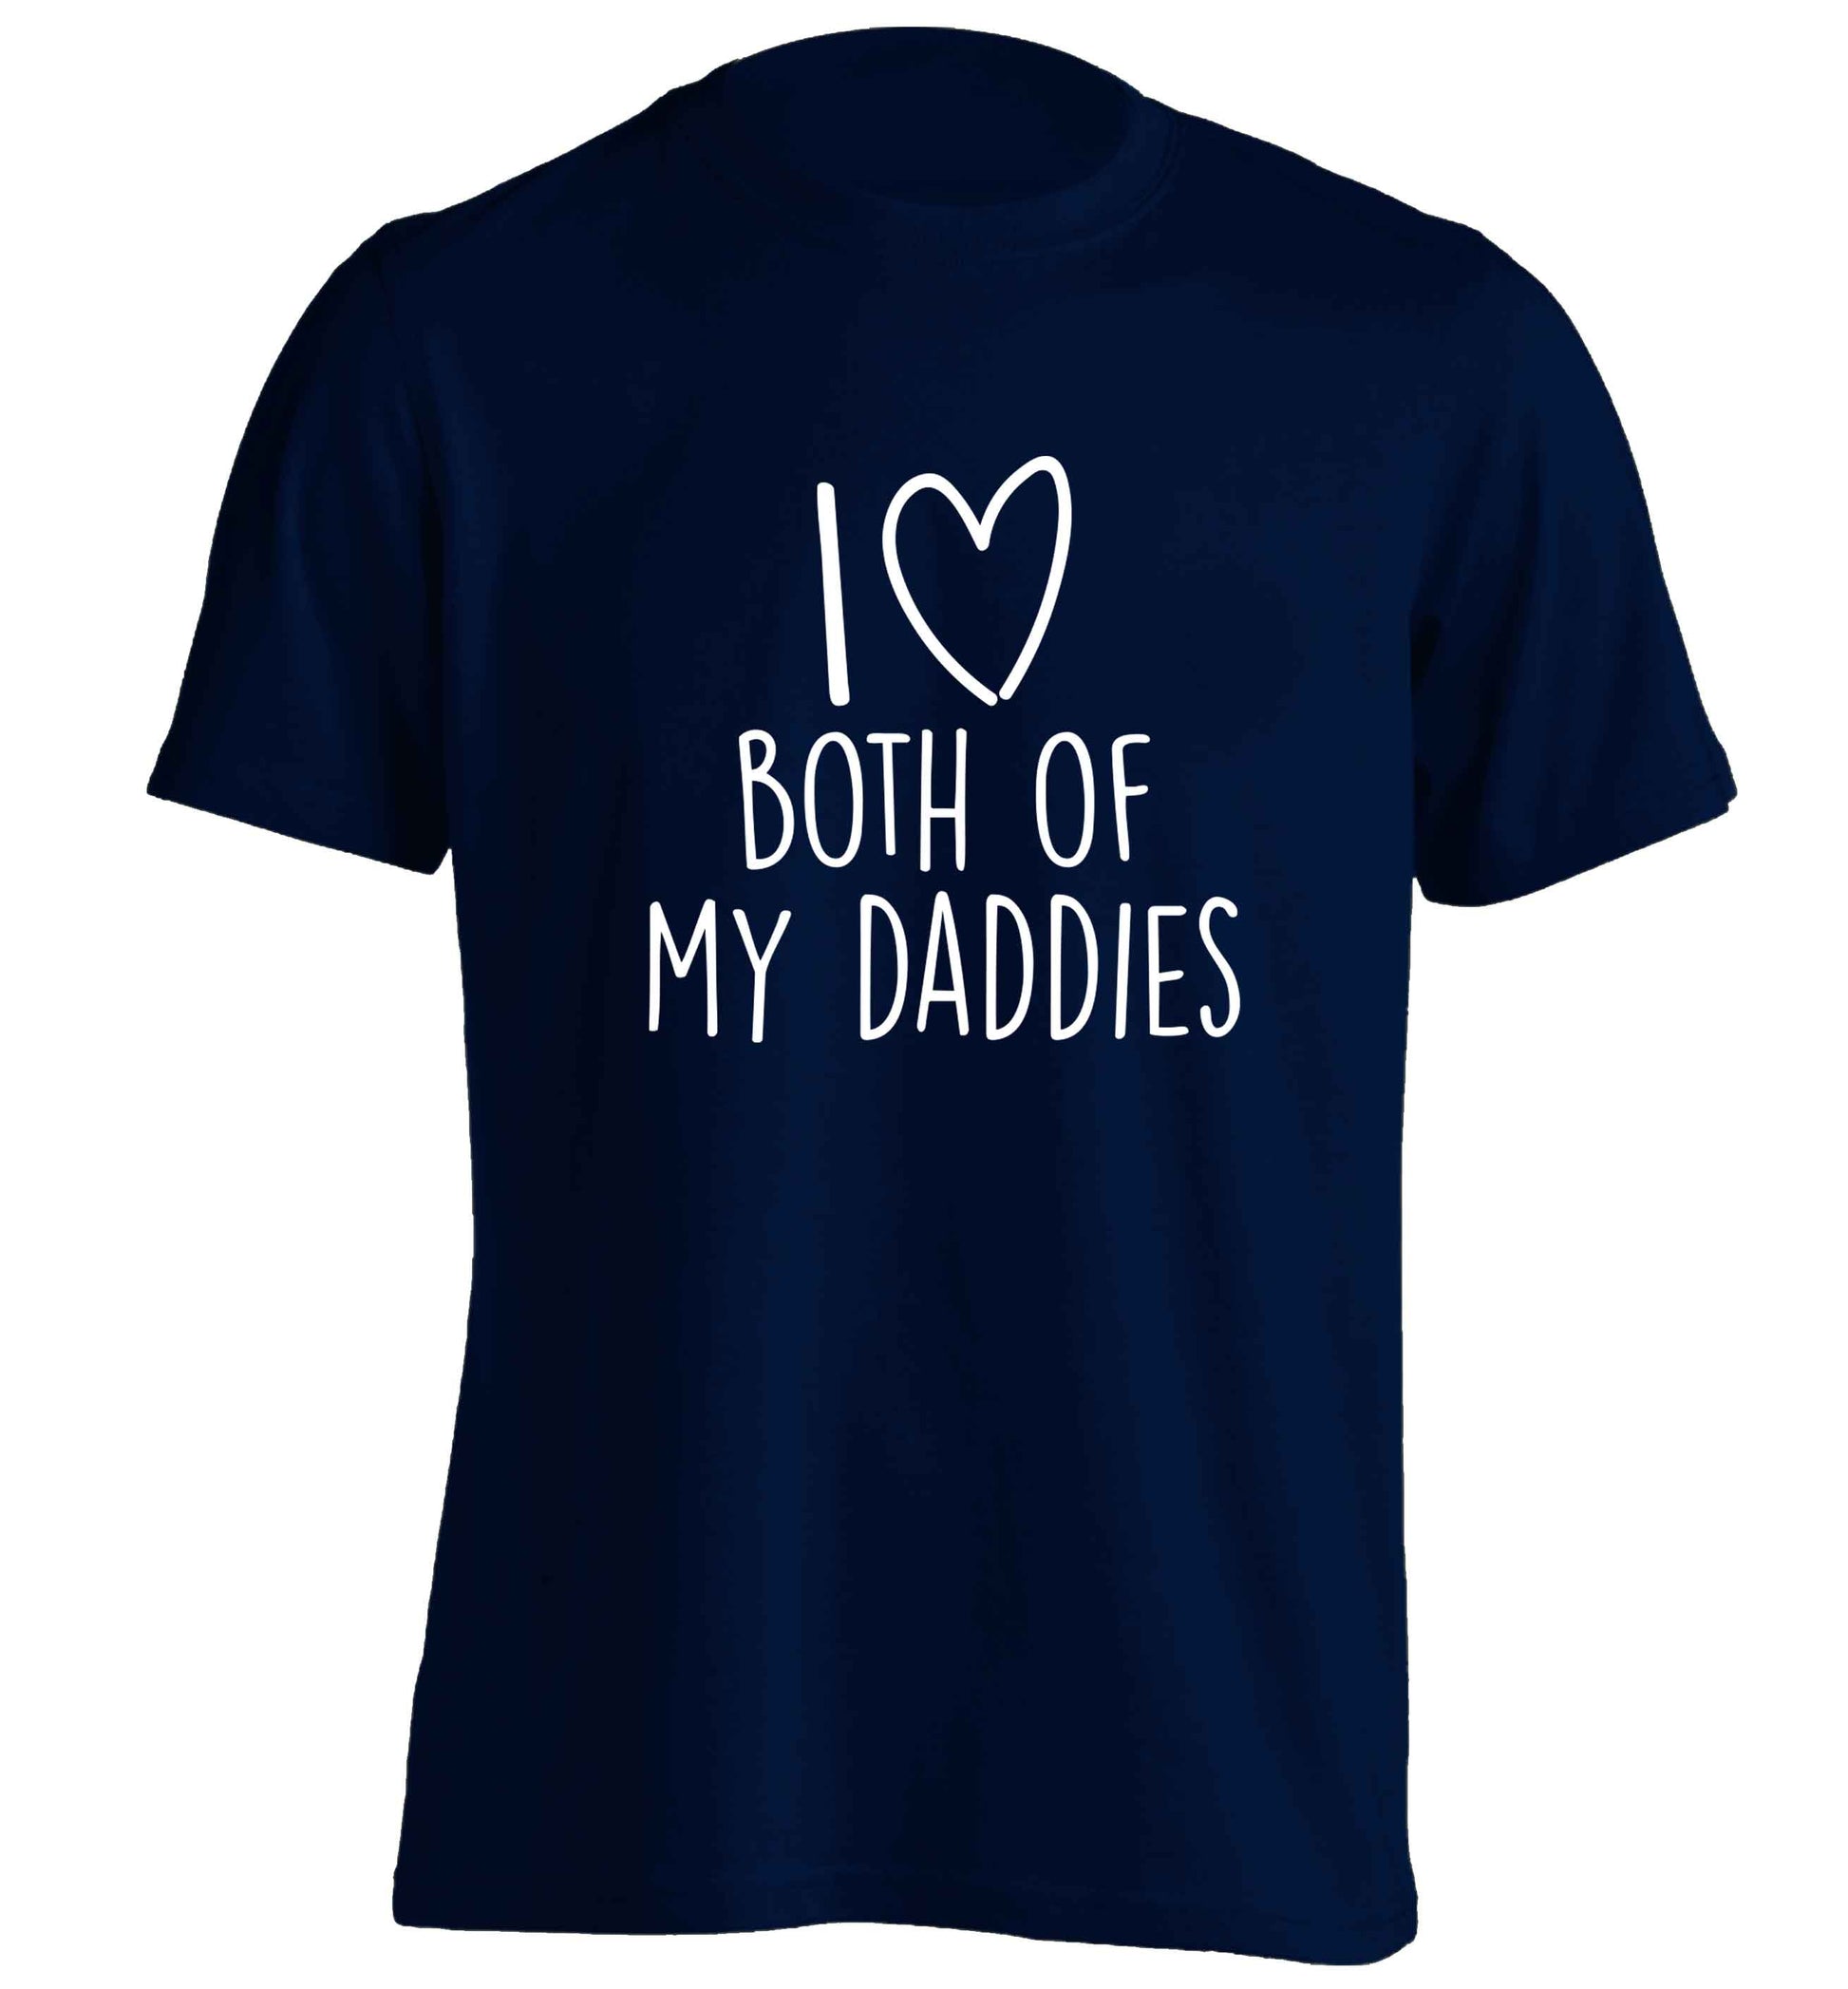 I love both of my daddies adults unisex navy Tshirt 2XL